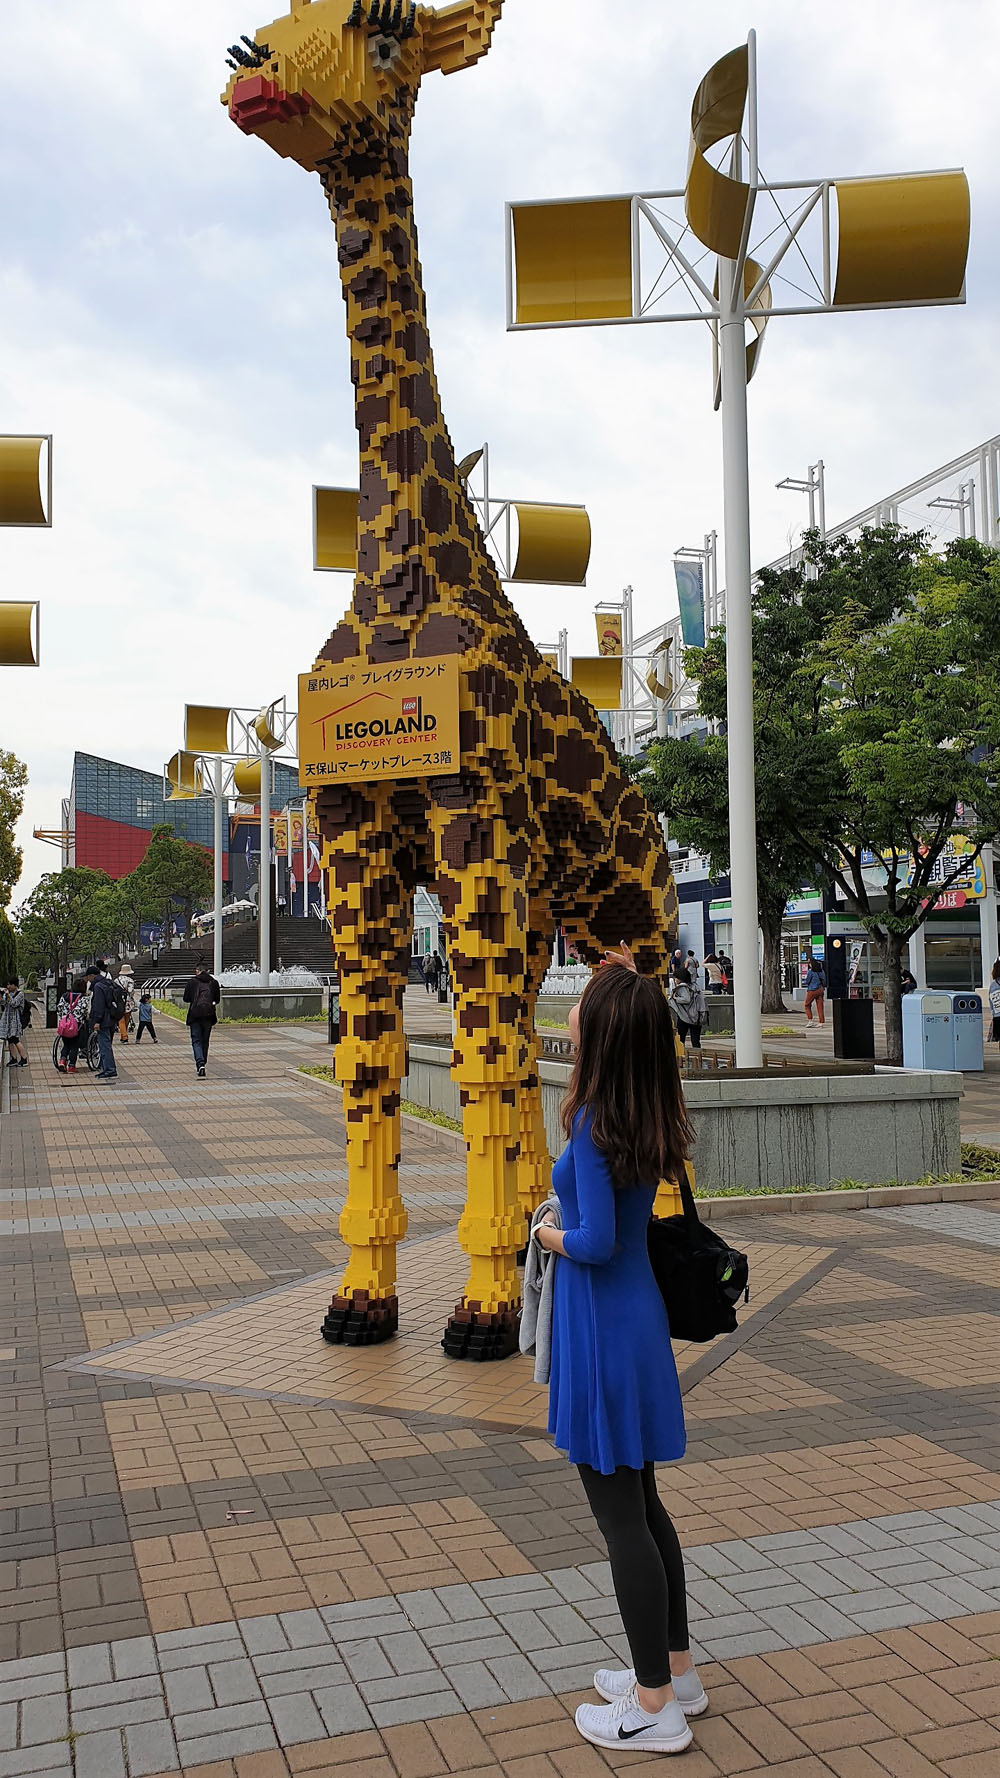 Legoland Discovery Centre Osaka